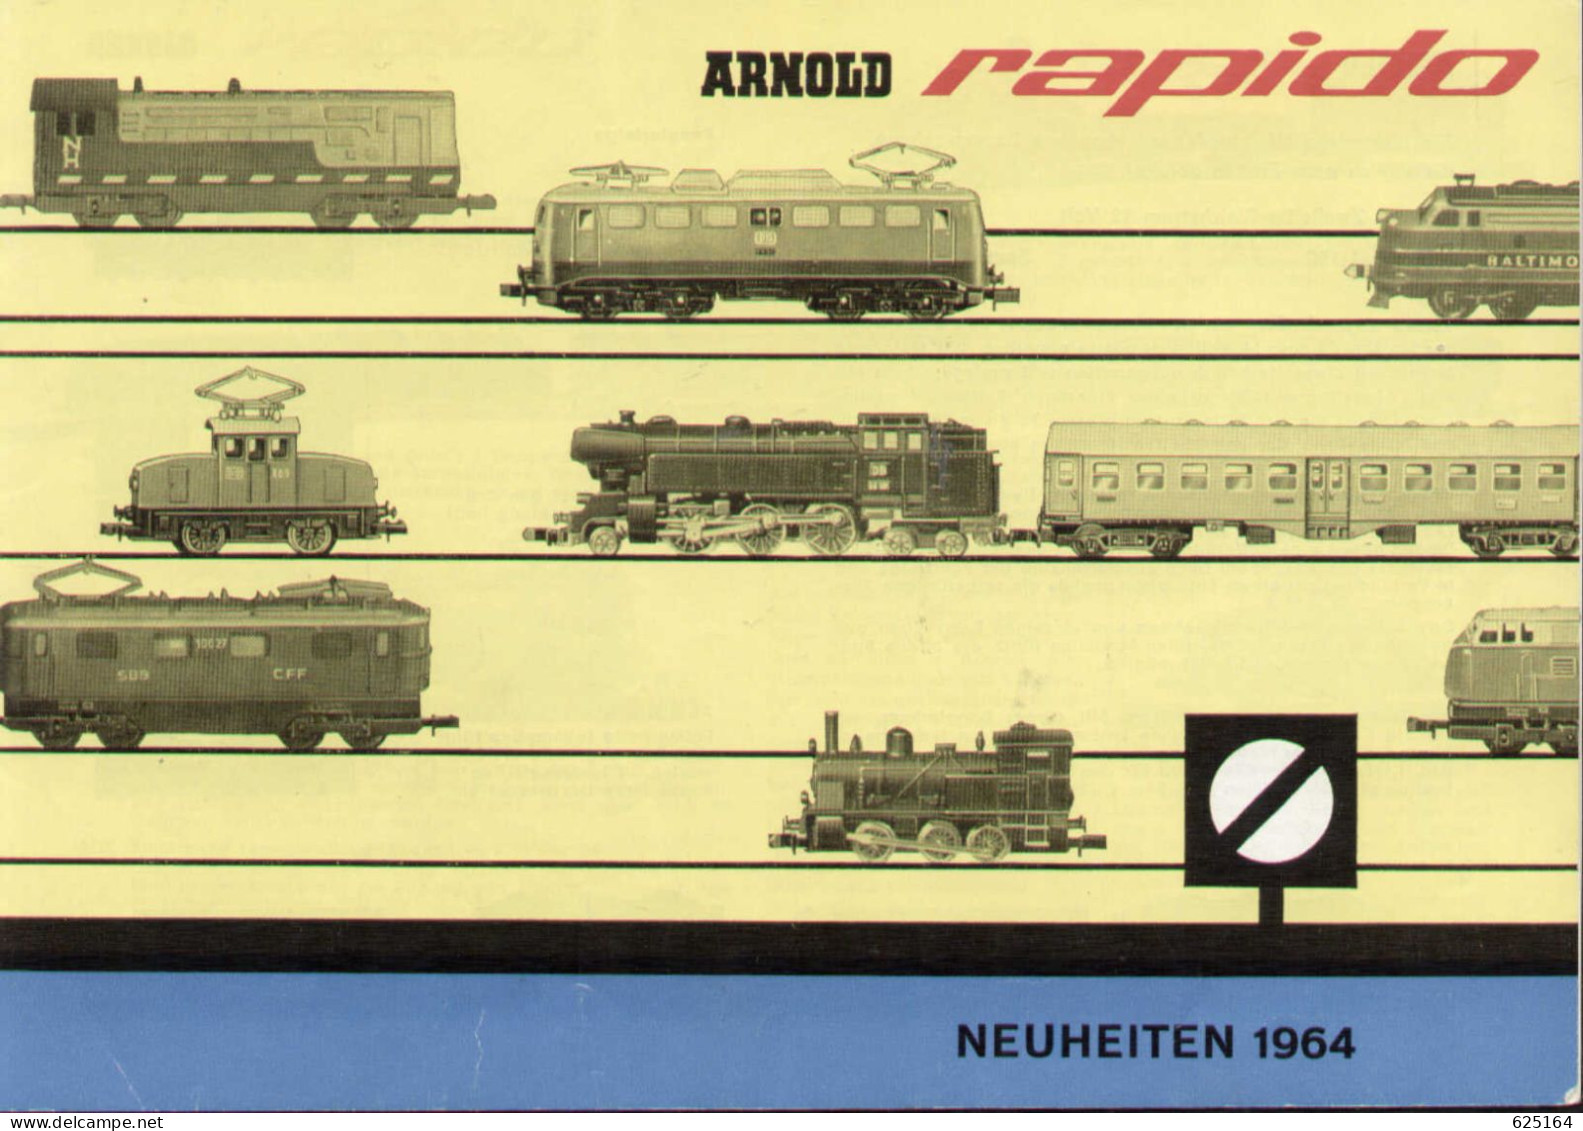 Catalogue ARNOLD RAPIDO 1967 Neuheiten Spur N = 9 Mm Maßstab 1/160 - German